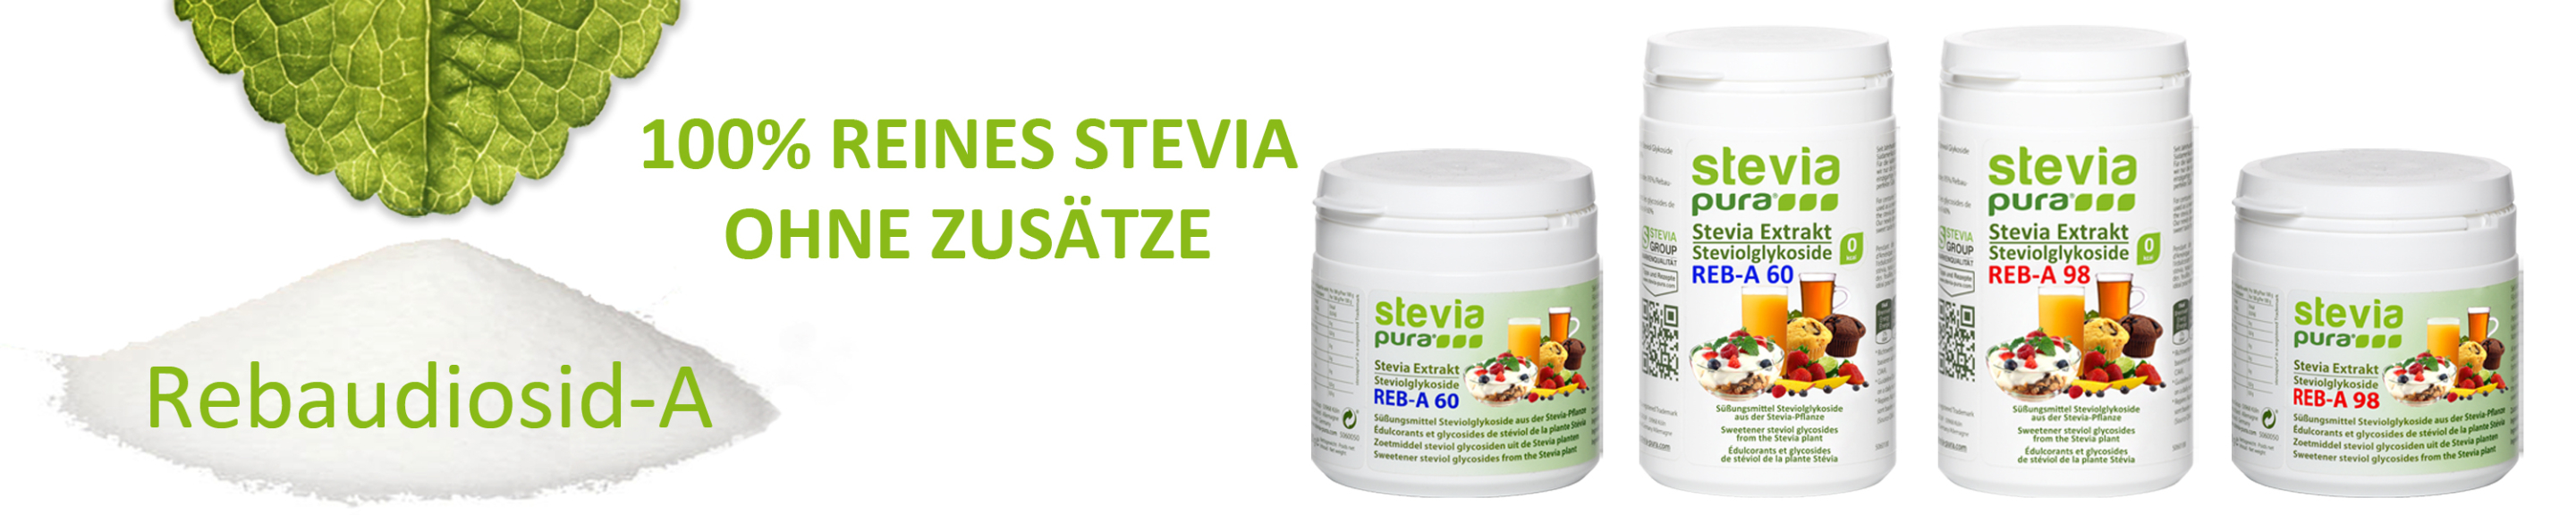 100% reines Stevia Pulver Rebaudiosid A98% reines Stevia...